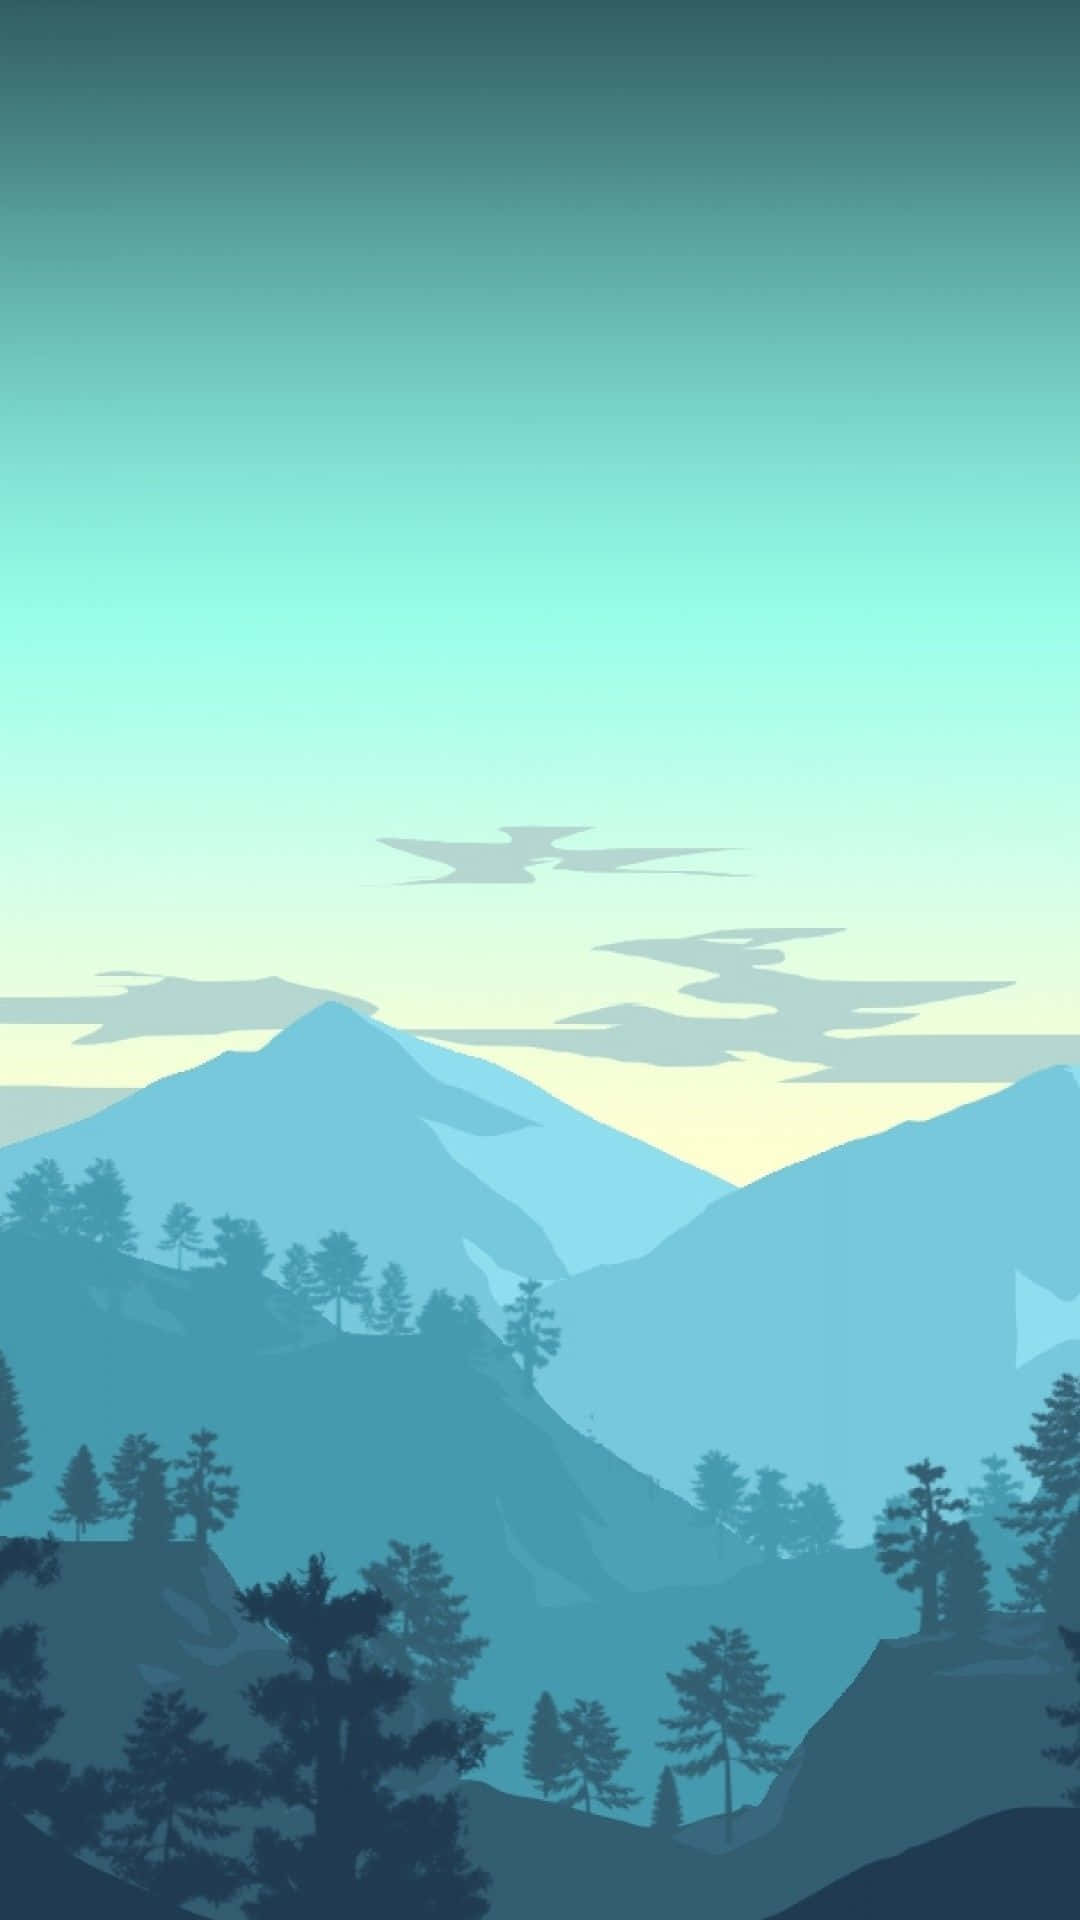 Minimalist Iphone X Blue Mountains Digital Art Background